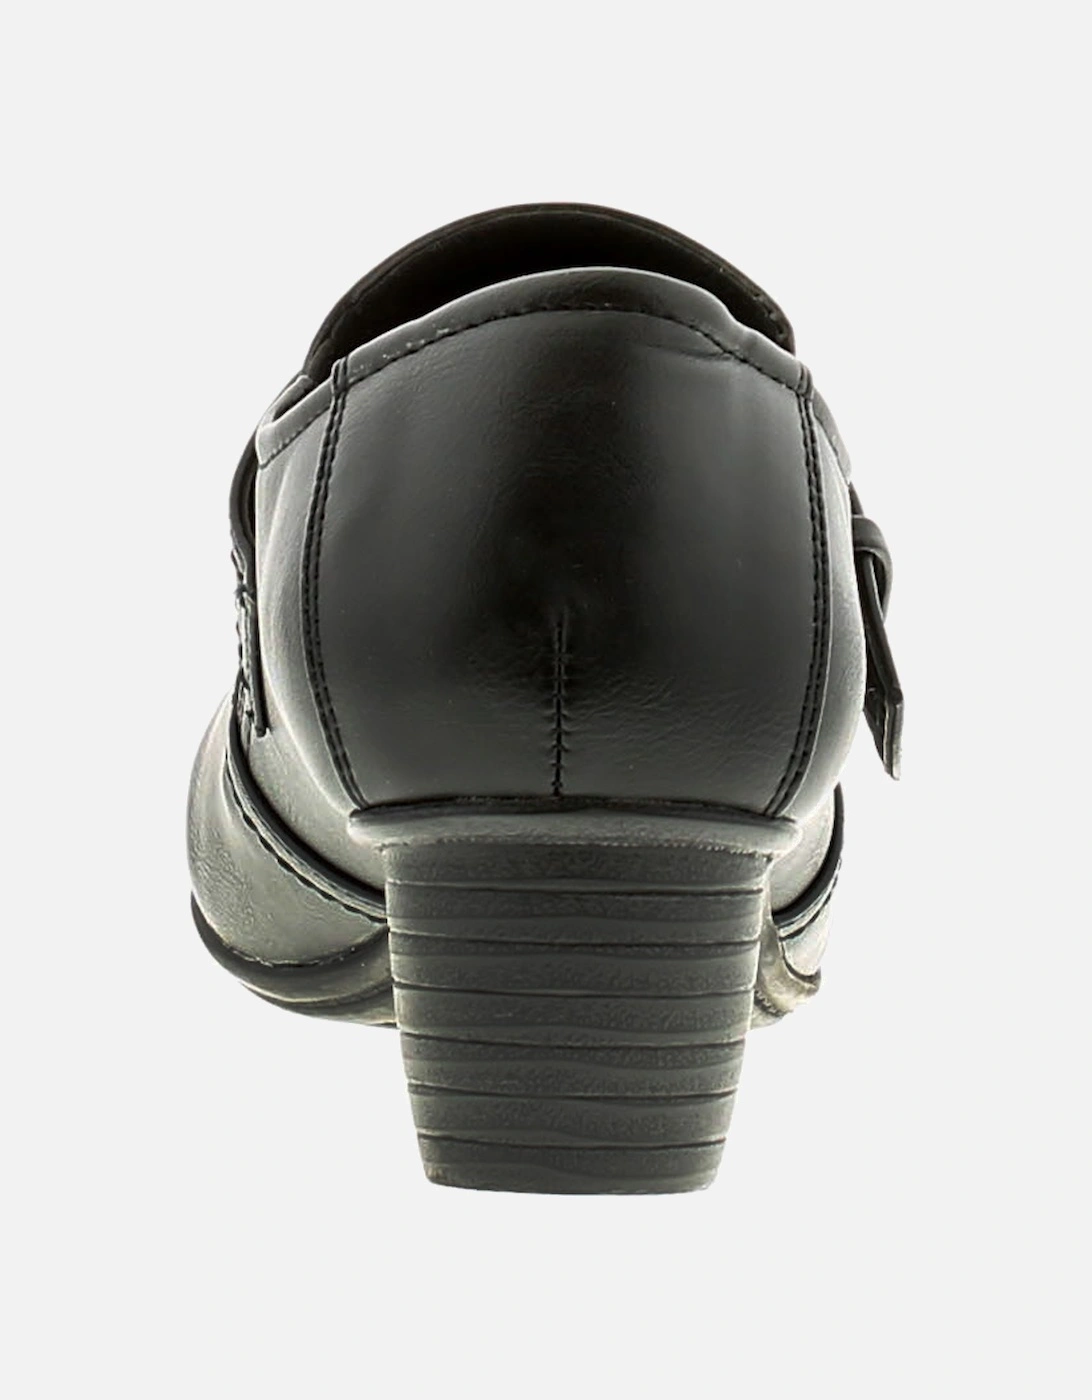 Womens Court Shoes Blyth Slip On black UK Size